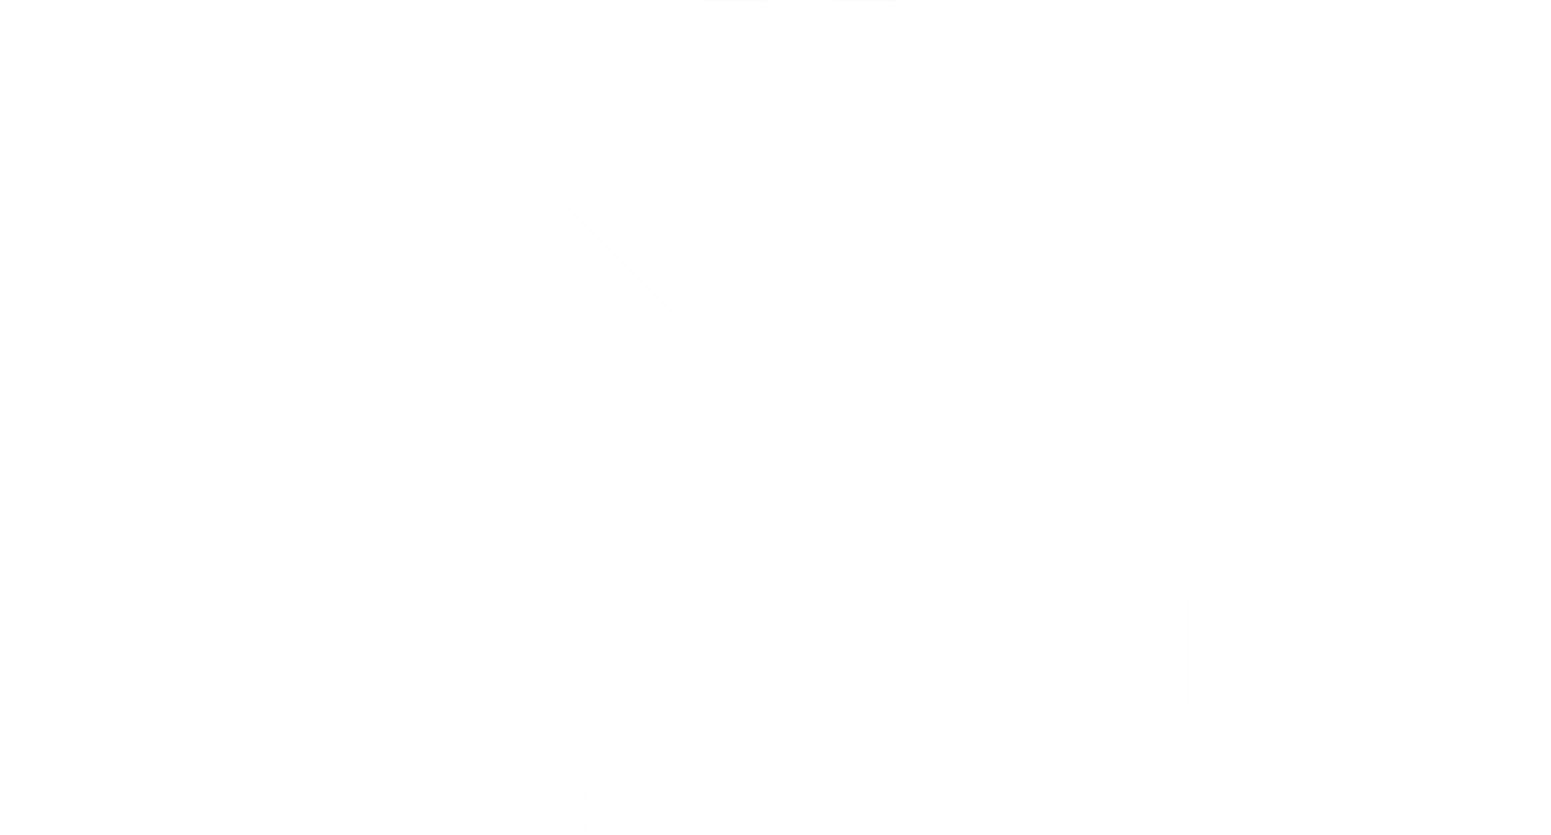 Sal Property Services Logo bianco